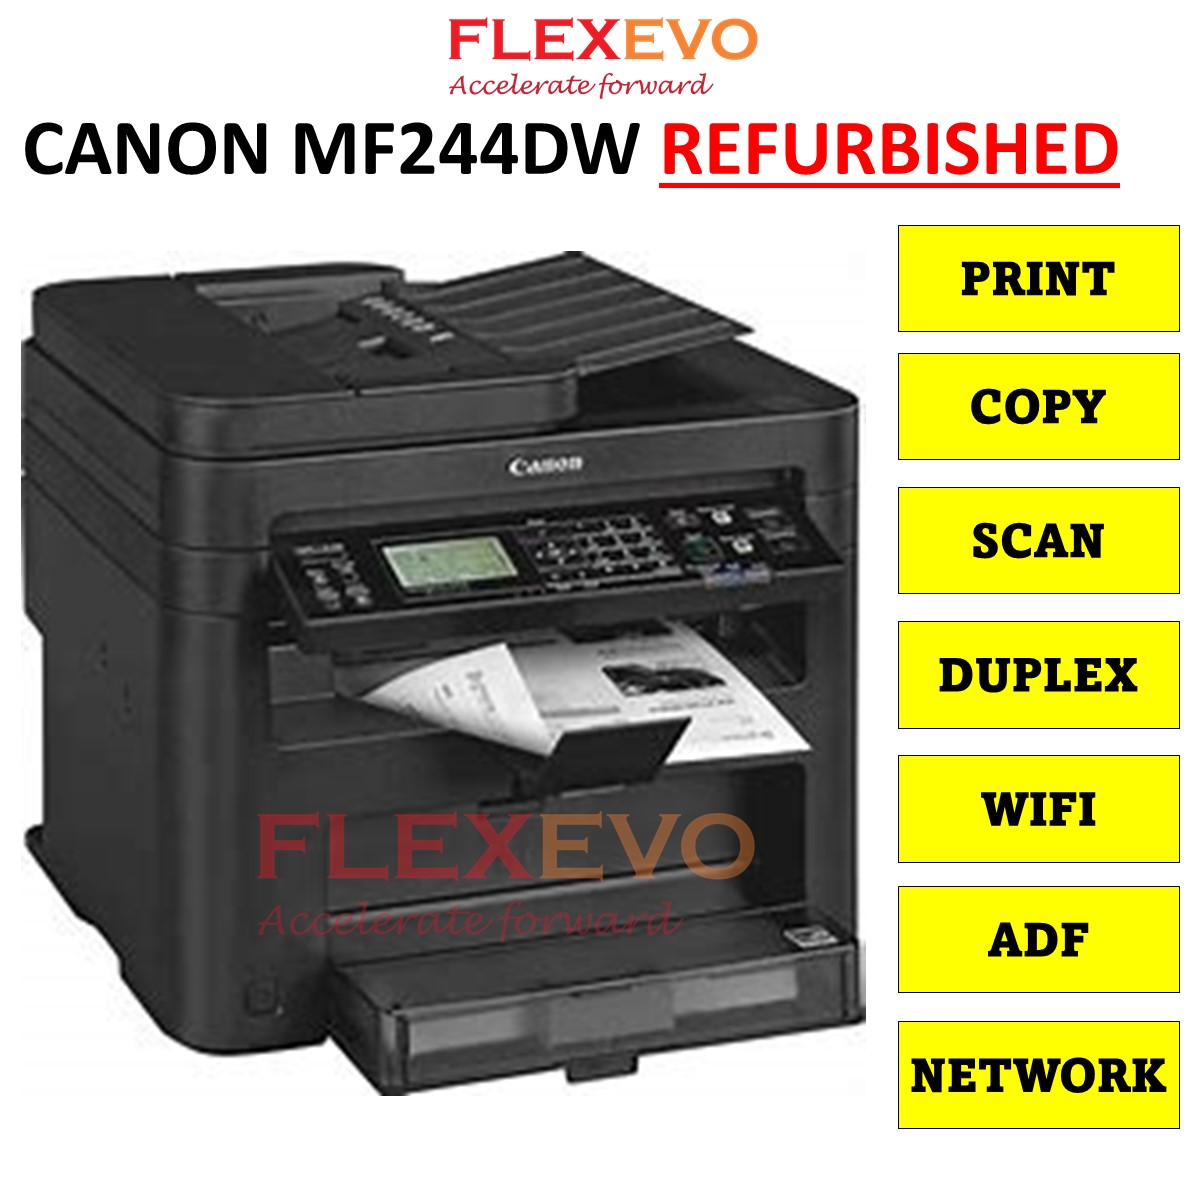 Canon Imageclass Mf244dw Mf244 Multifunctional Printer Refurbished Used Print Scan Copy Wifi 3430